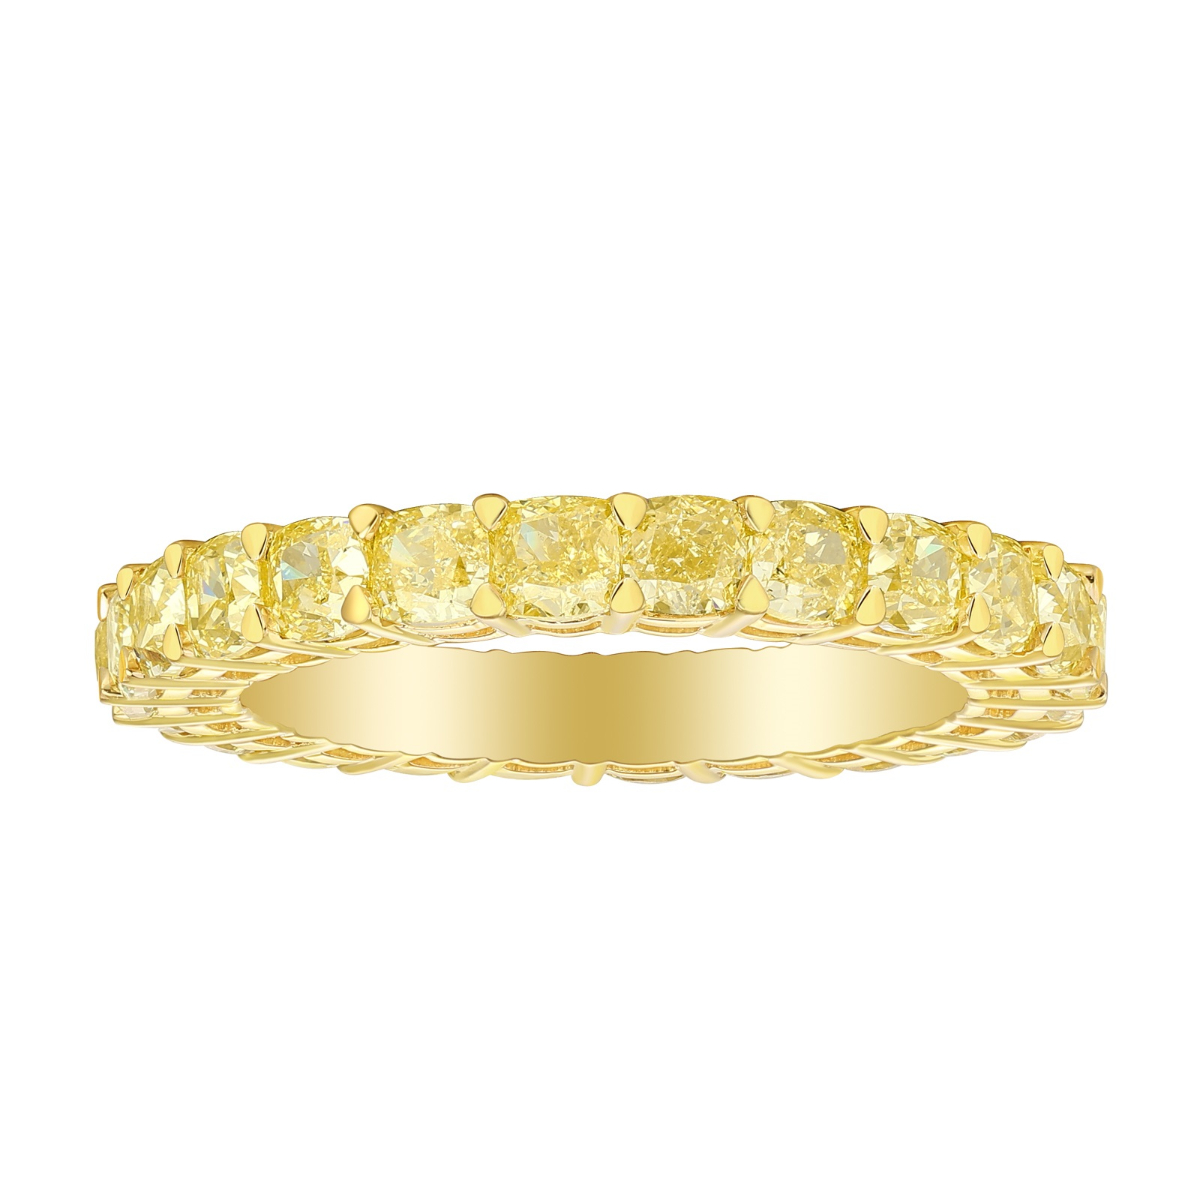 R37132NYL – 18K Yellow Gold Diamond Ring, 3.87 TCW